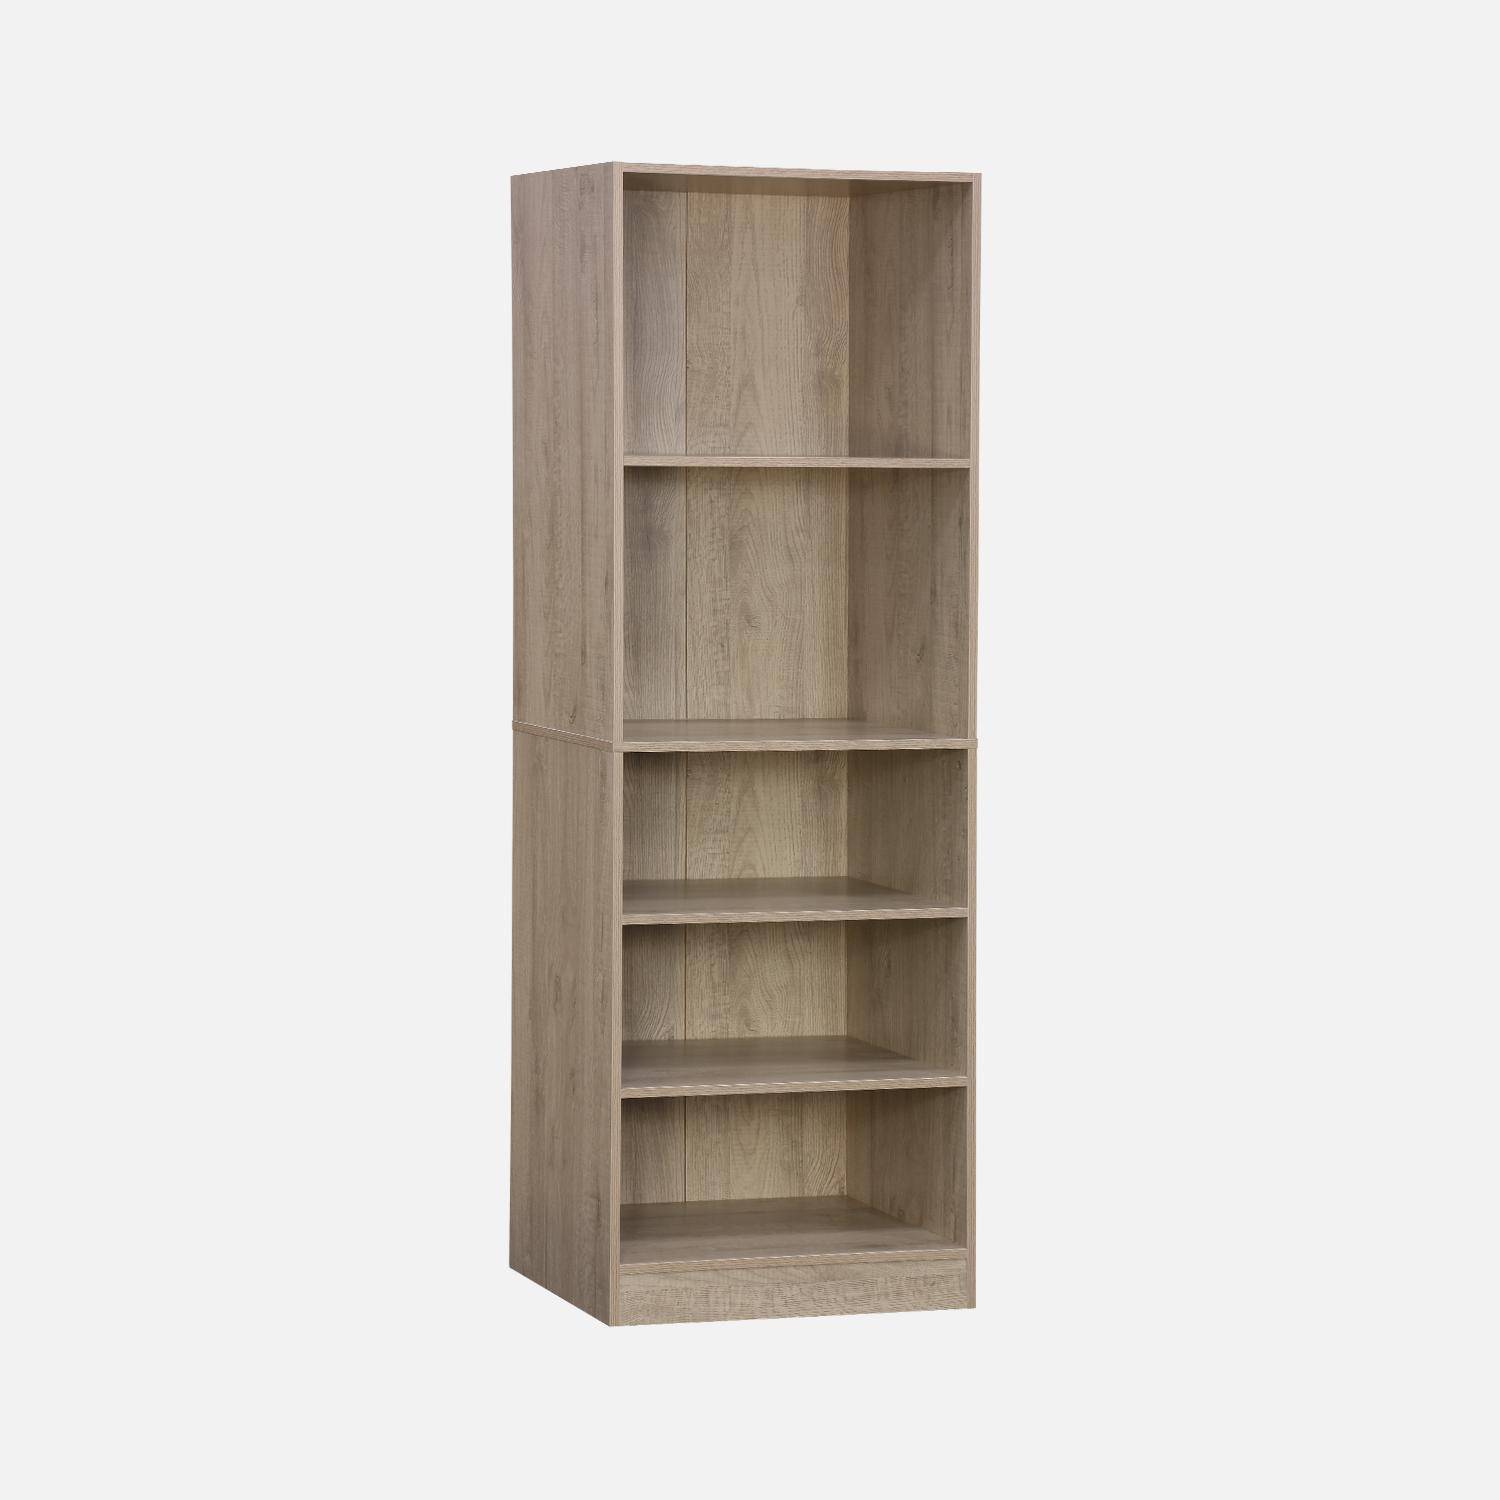 Modular open wardrobe shelf unit, 60x45x180cm, Modulo, 5 shelves, Natural,sweeek,Photo3